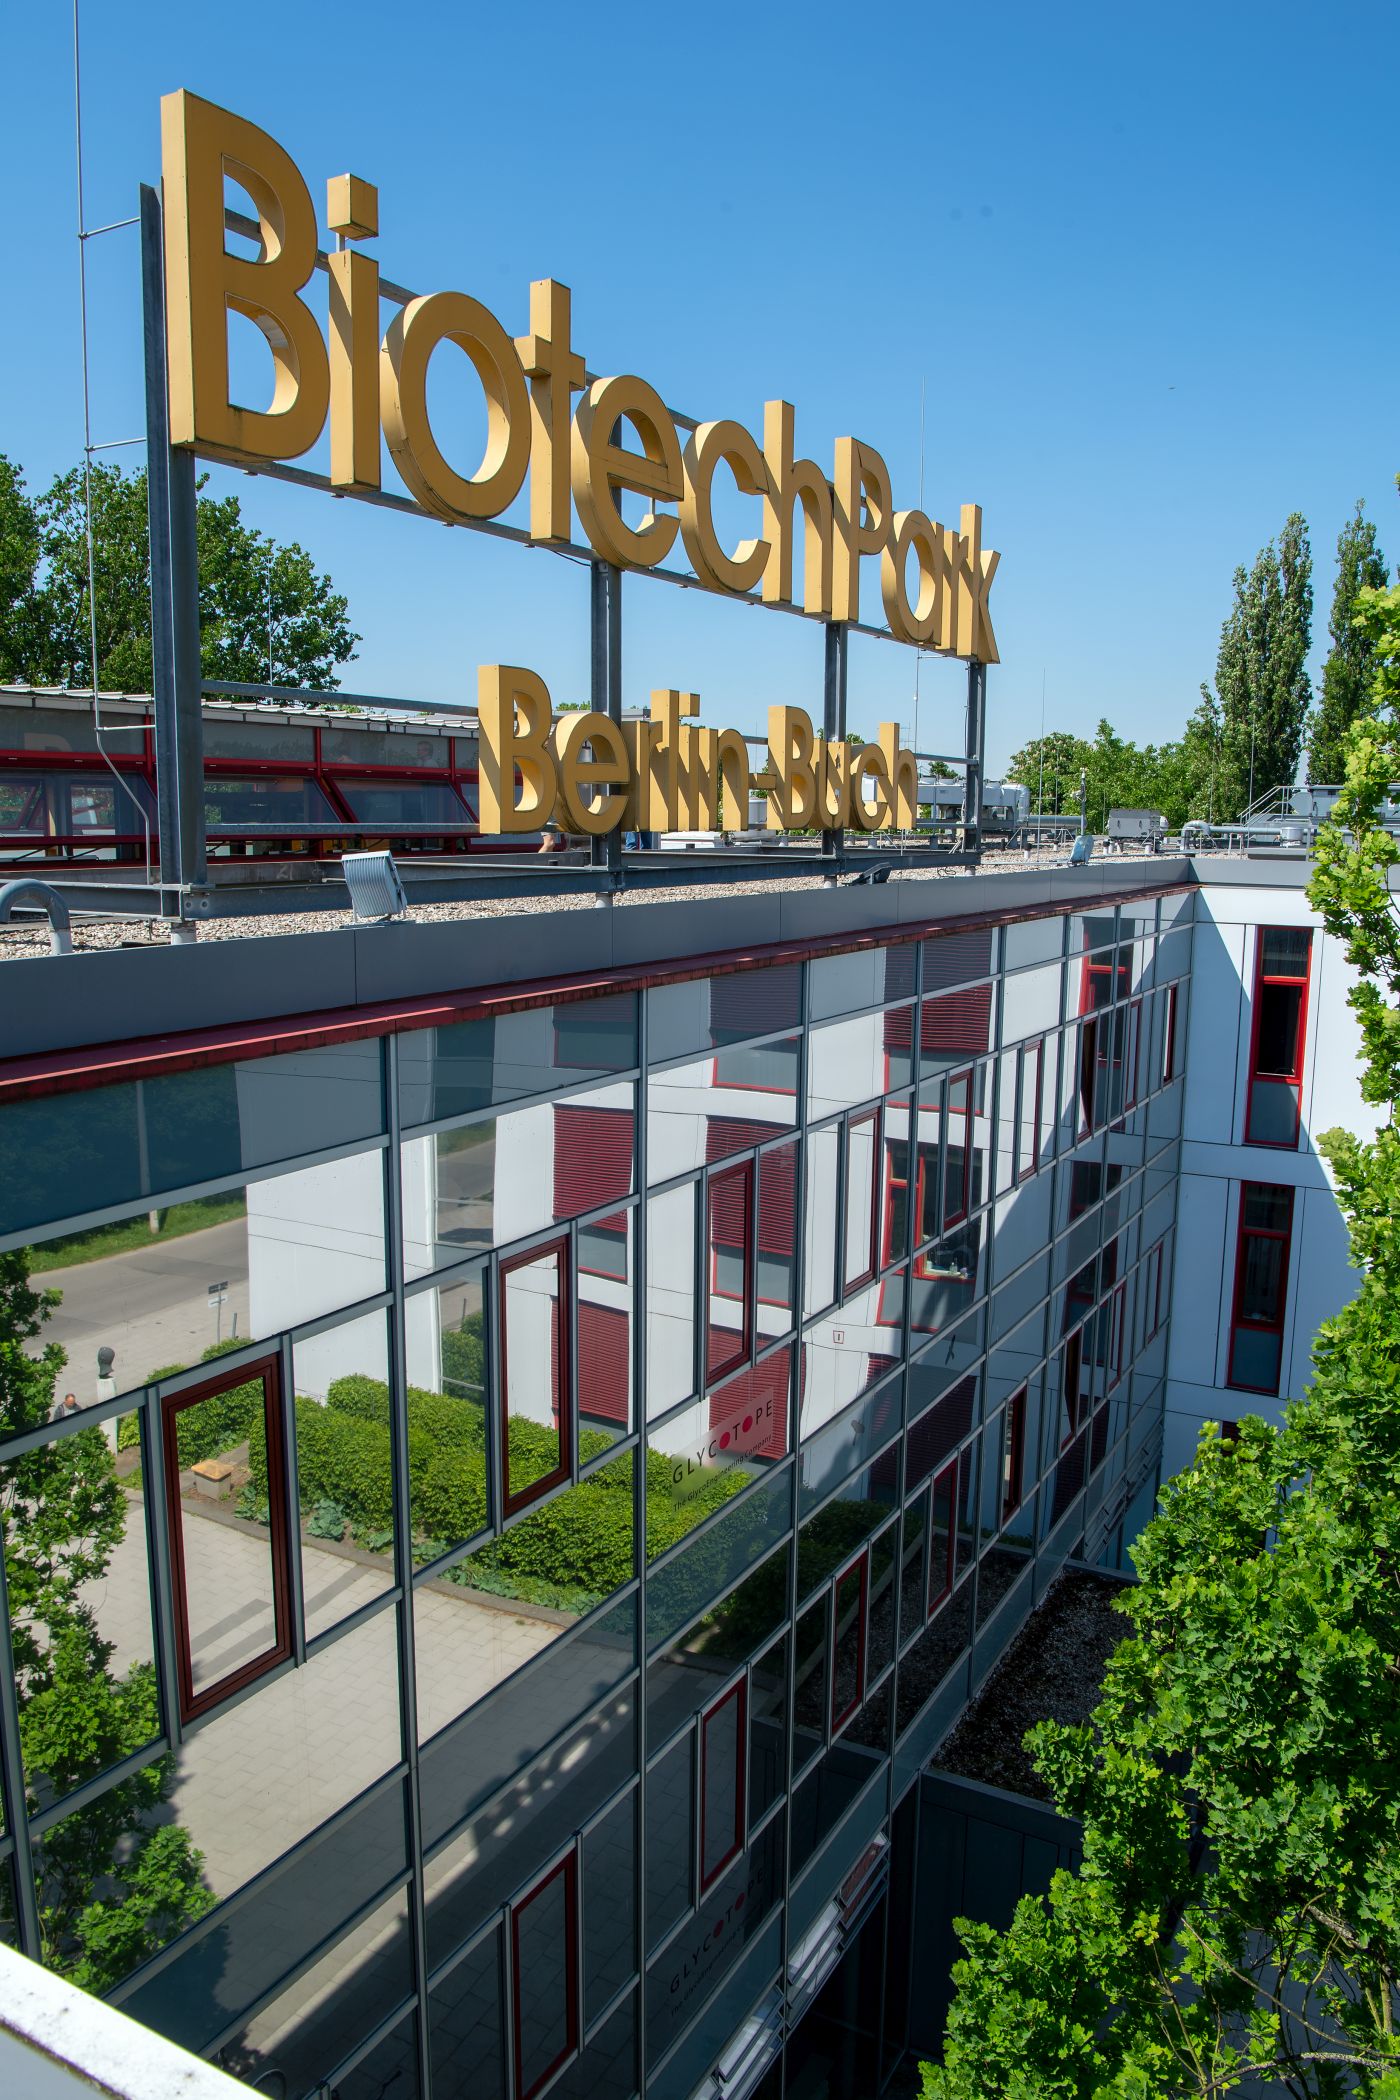 Arnold-Graffi-Haus at the BiotechPark Berlin-Buch